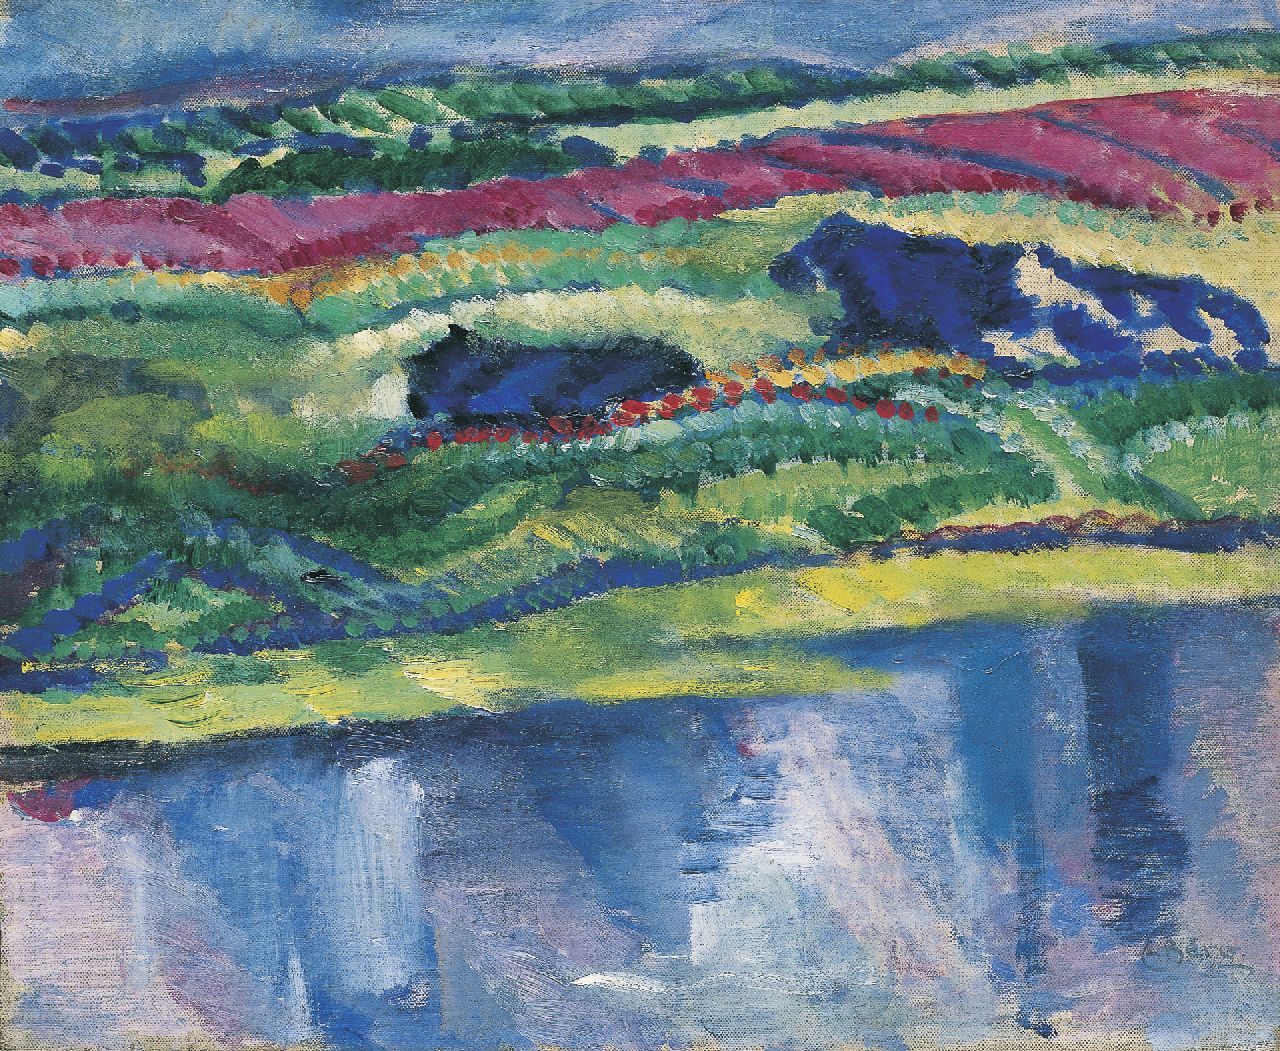 Berg E.  | Else Berg, Landscape with cows, Öl auf Leinwand  auf Holzfaser 40,0 x 48,5 cm, signed l.r. und painted ca. 1911-1912